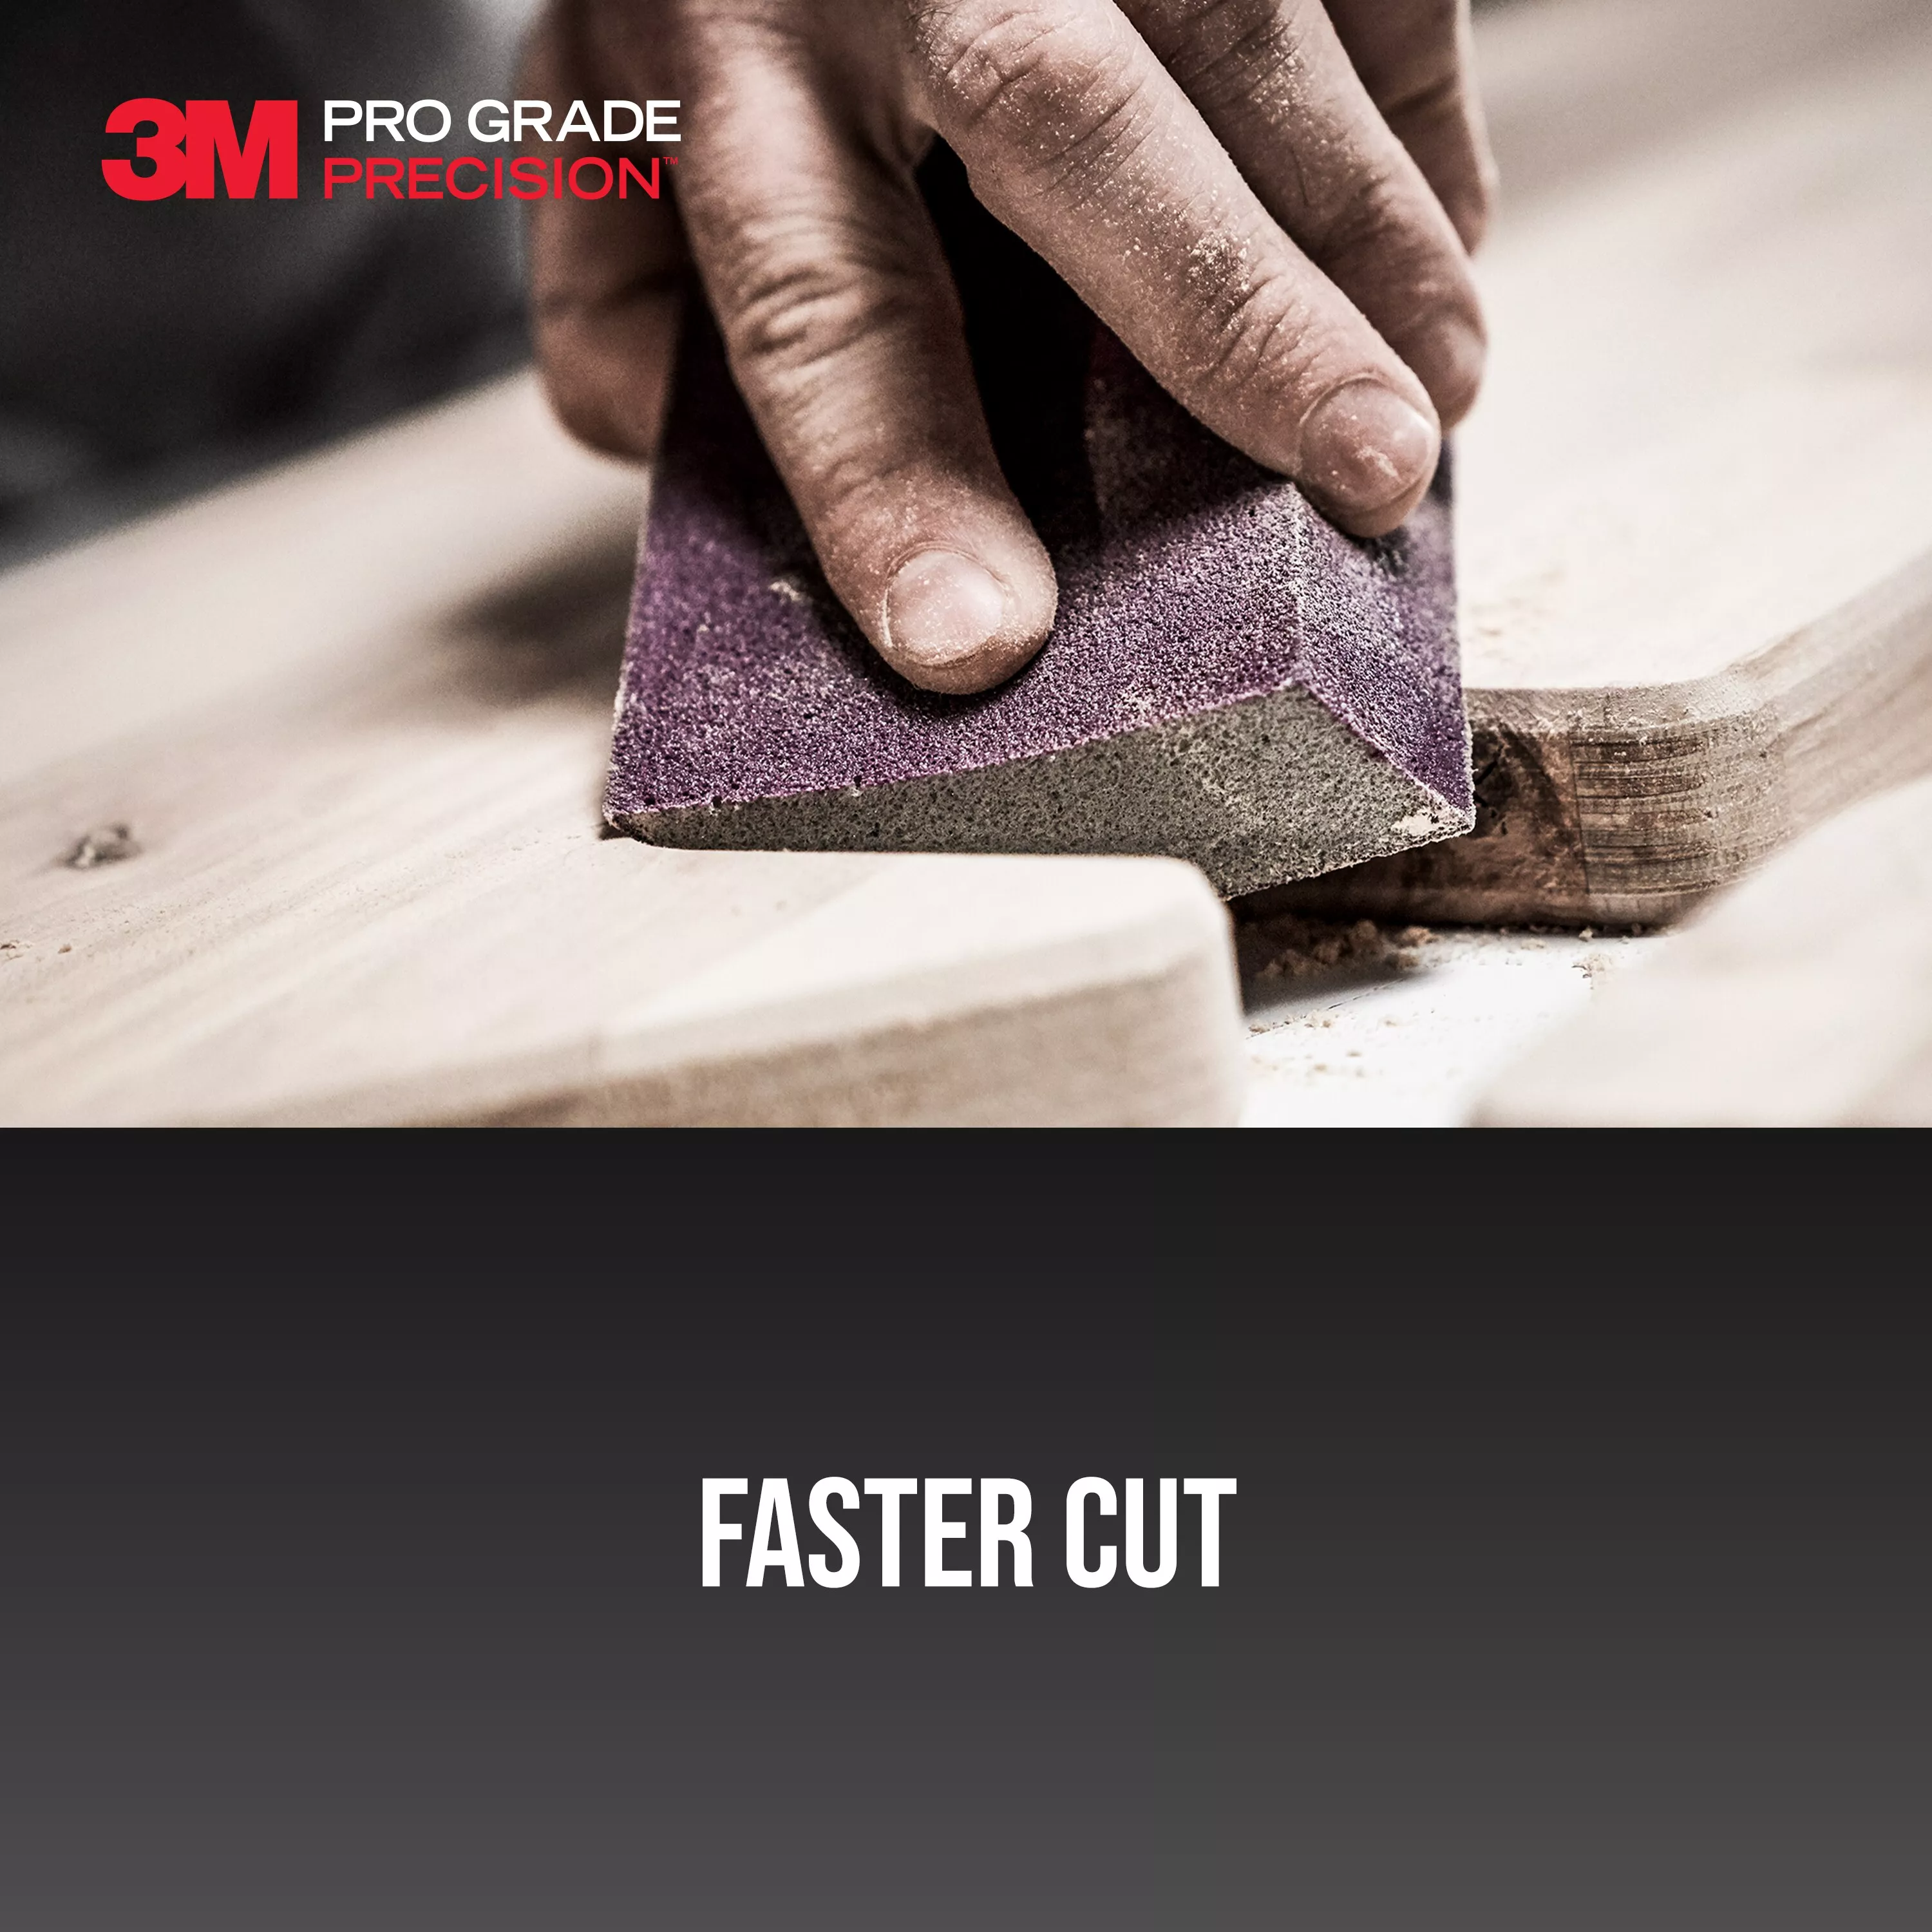 SKU 7100169978 | 3M™ Pro Grade Precision™ Faster Sanding Block Sponge